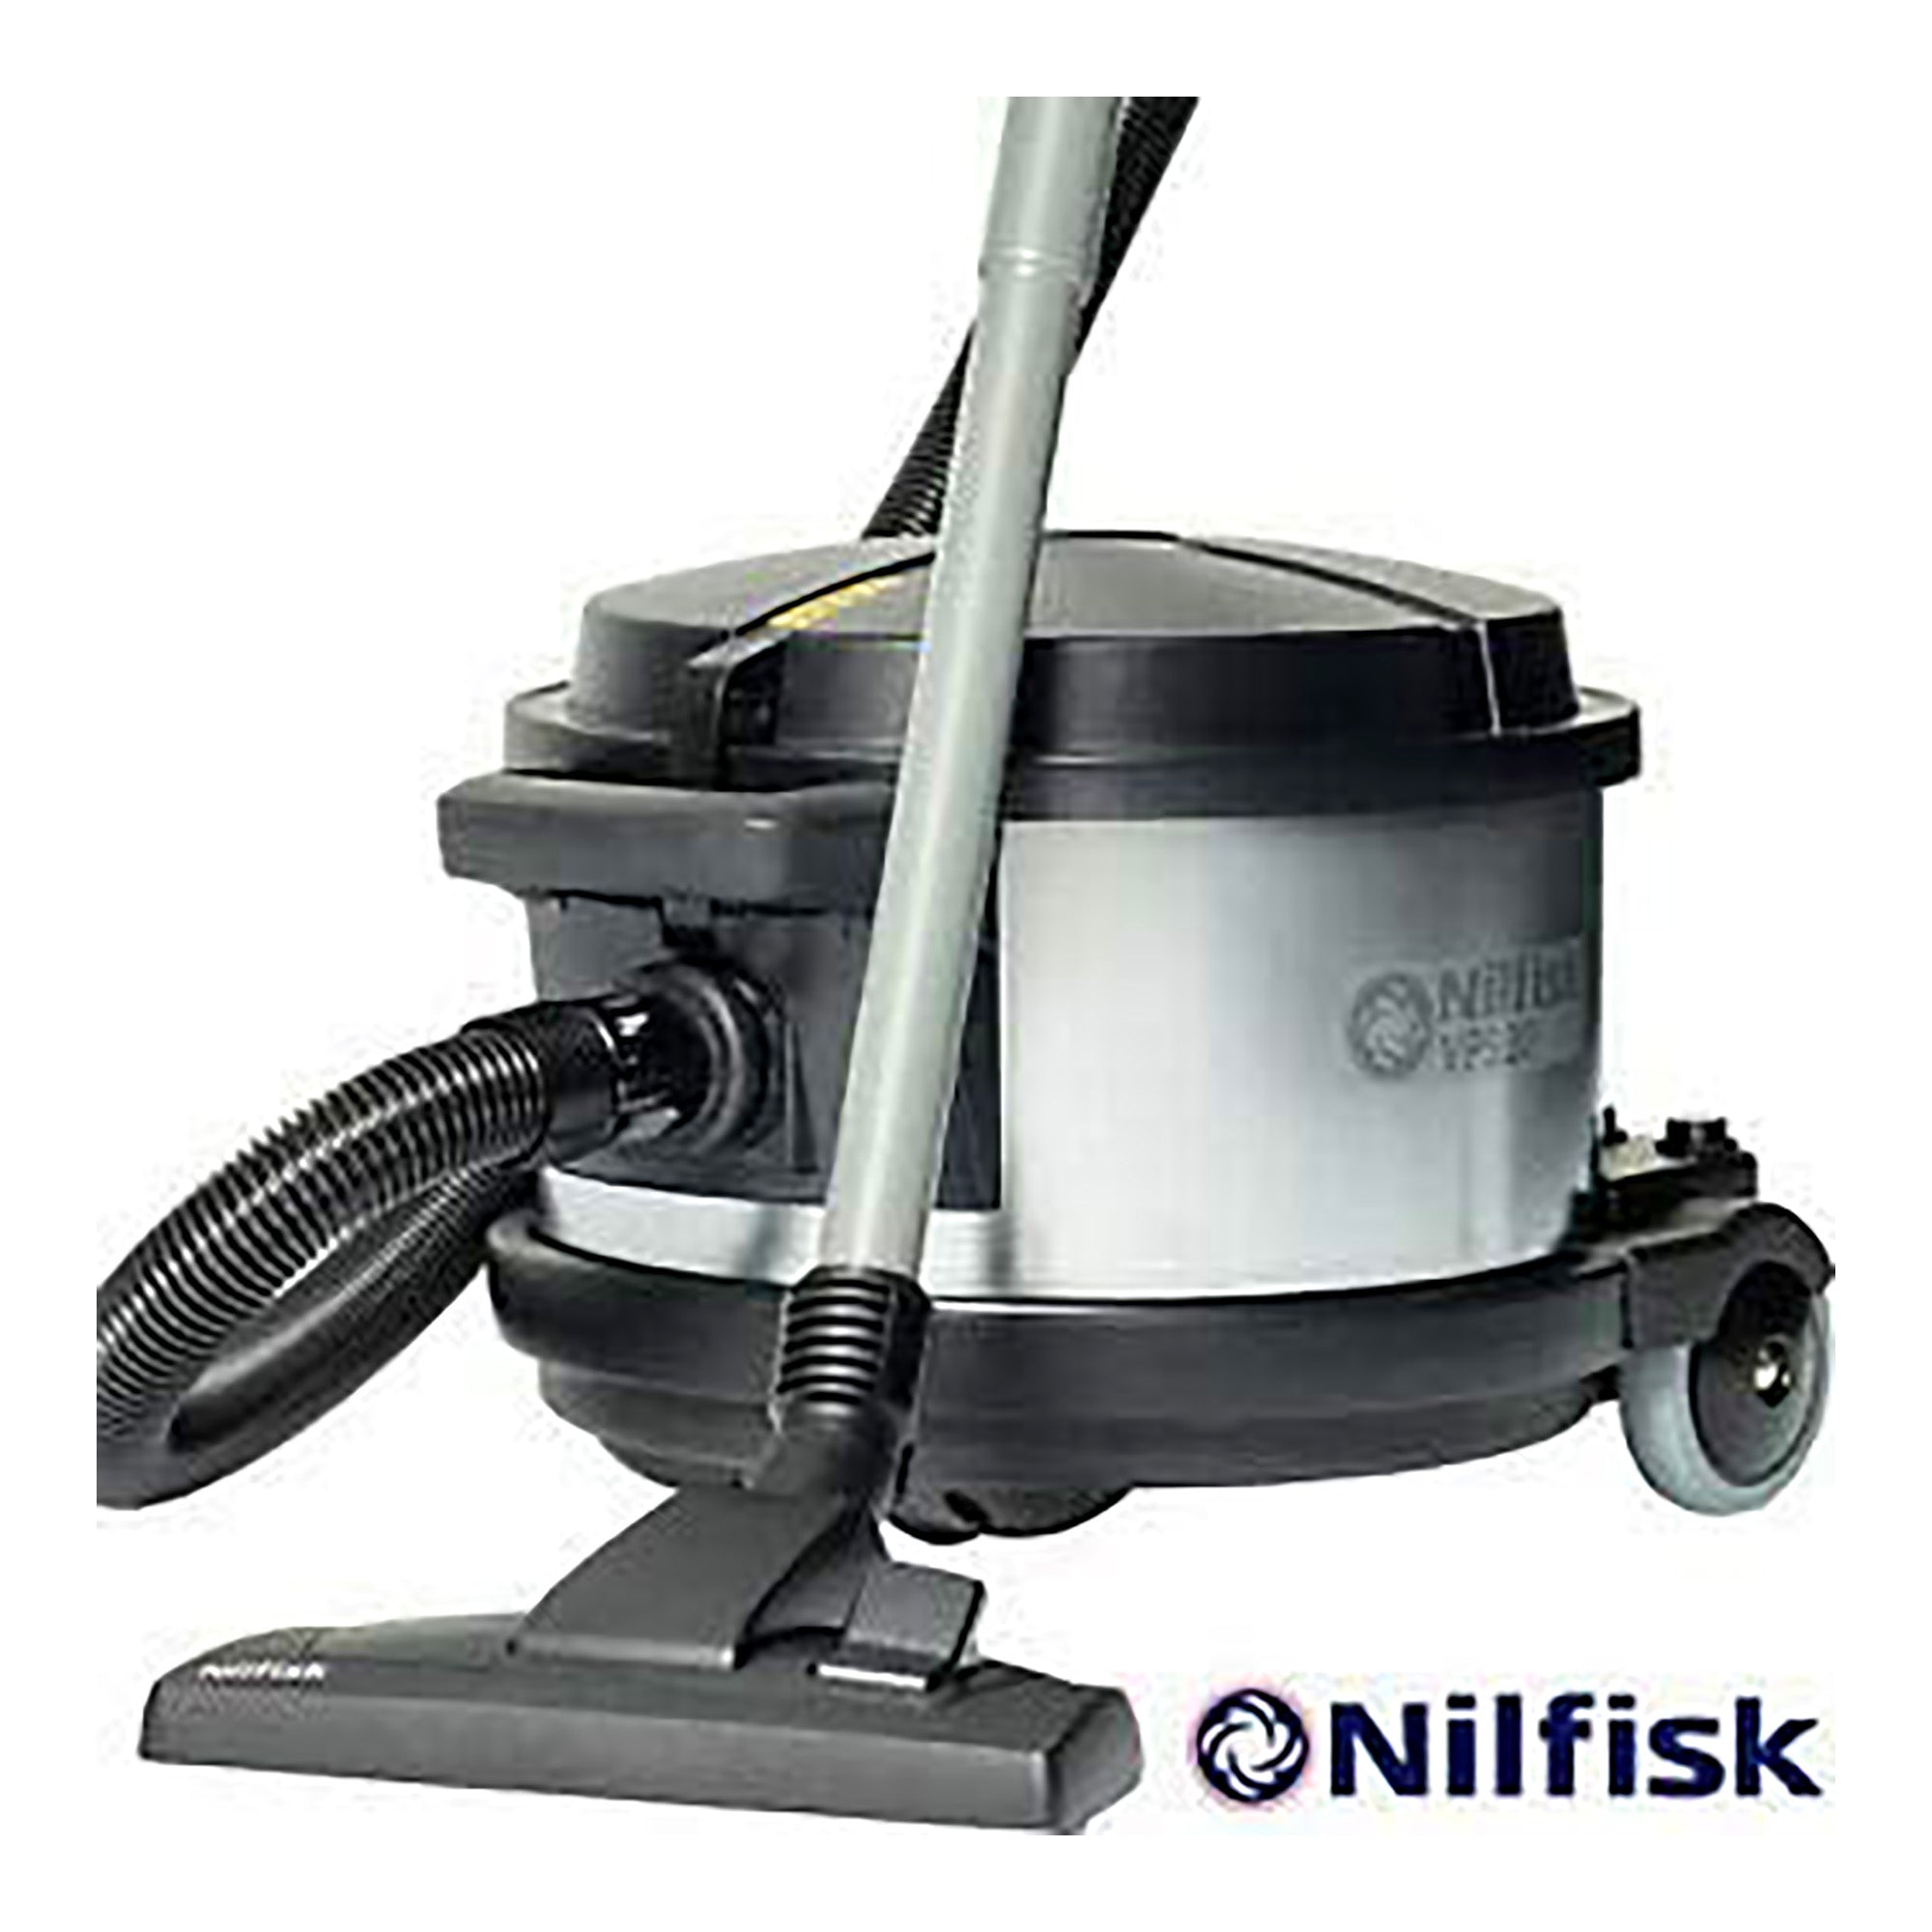 Nilfisk VP930 HEPA Canister Vacuum